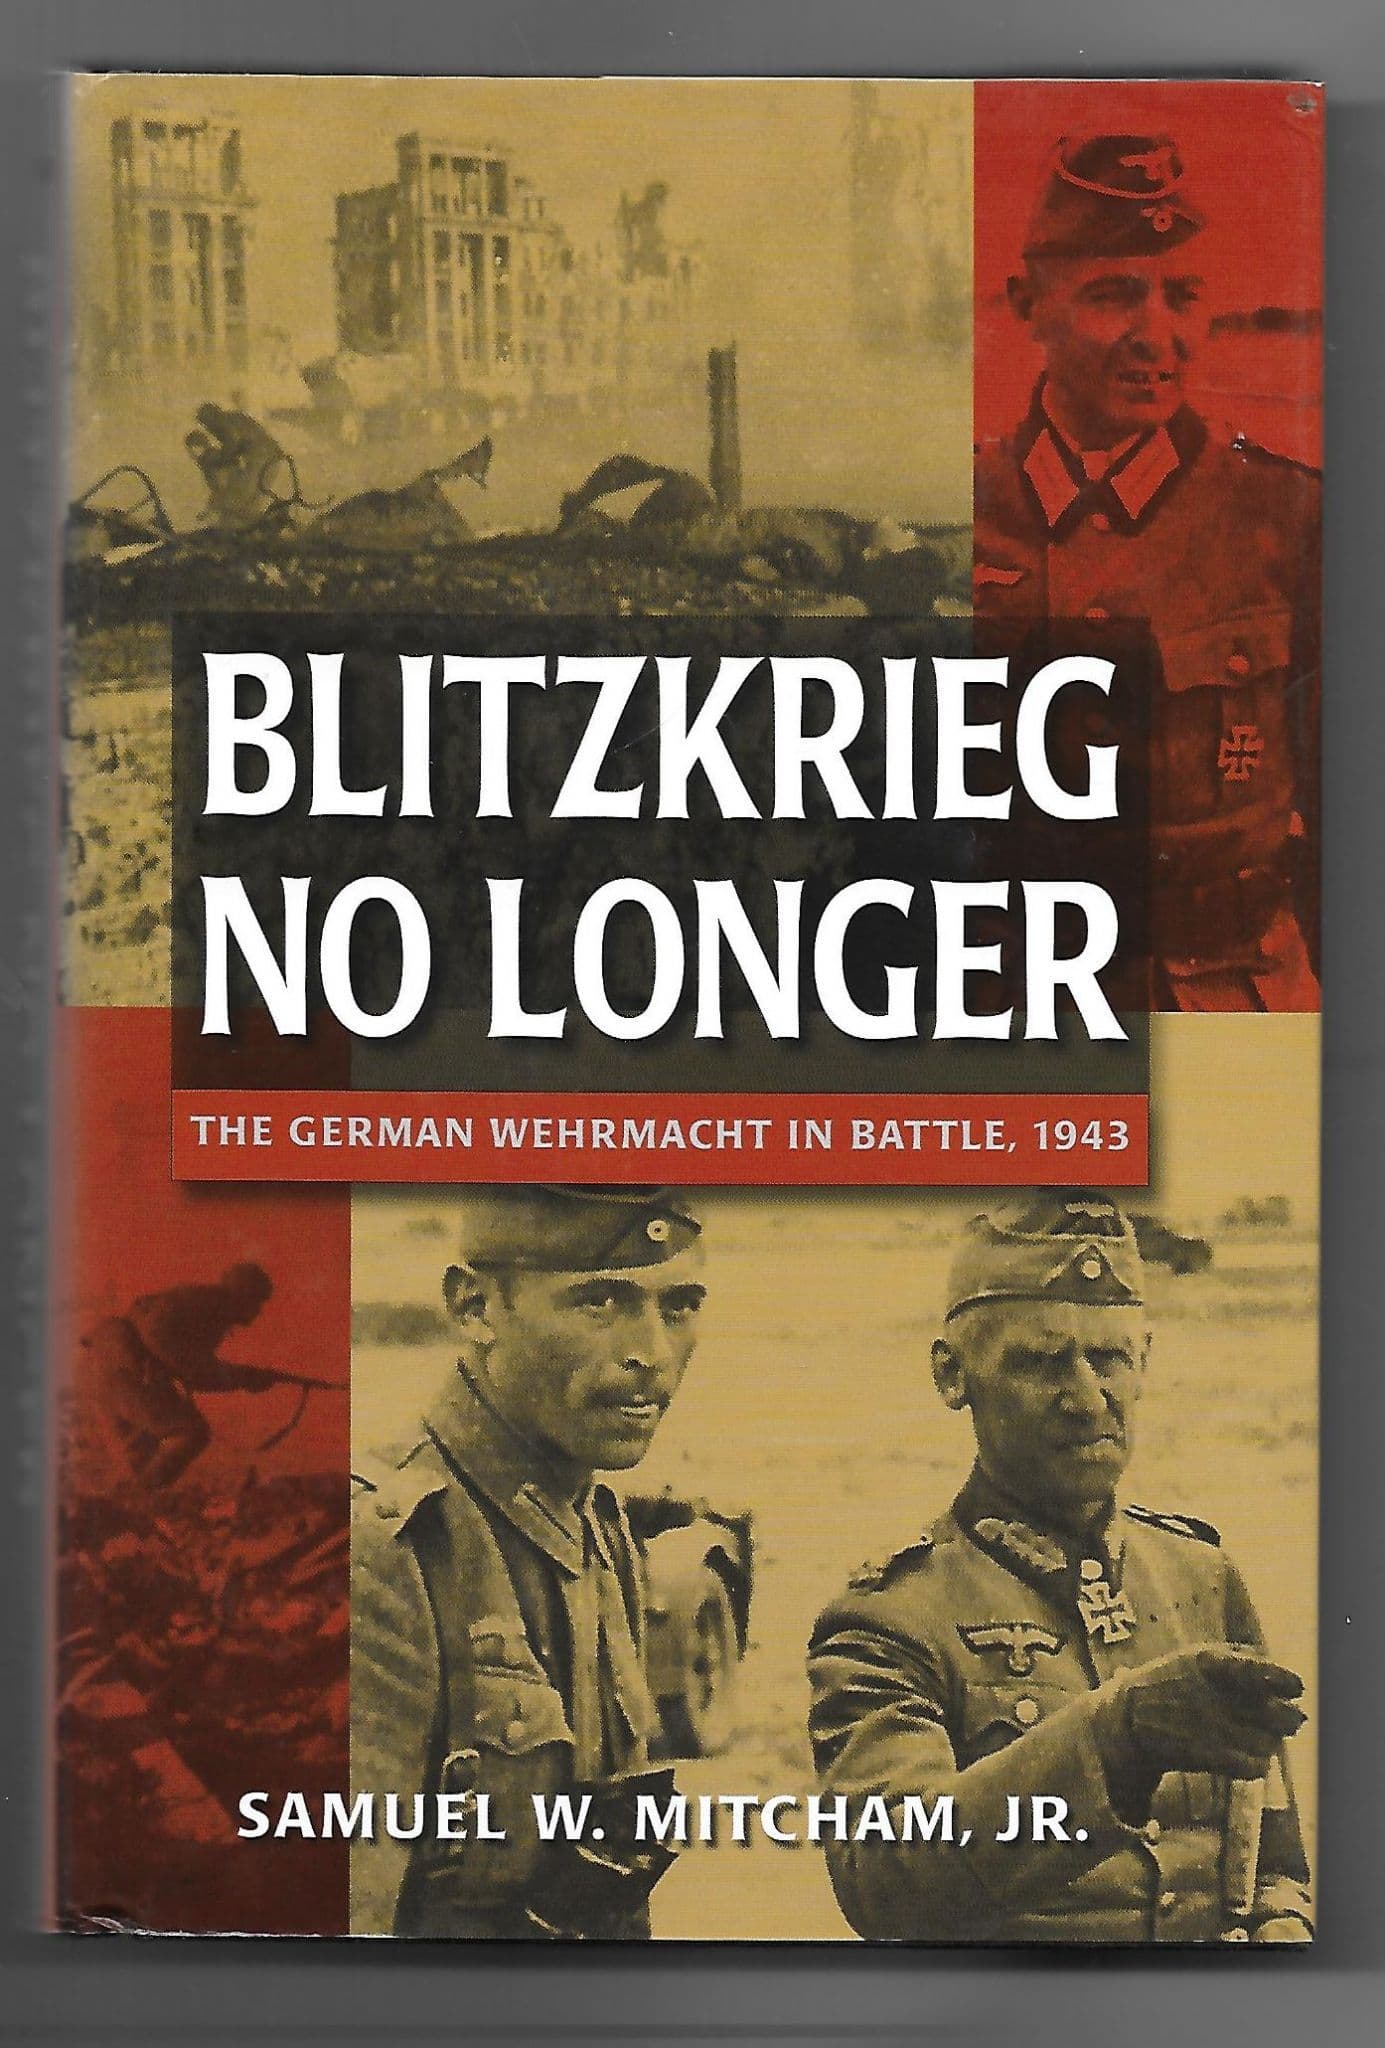 Blitzkrieg No Longer, The German Wehrmacht in Battle, 1943